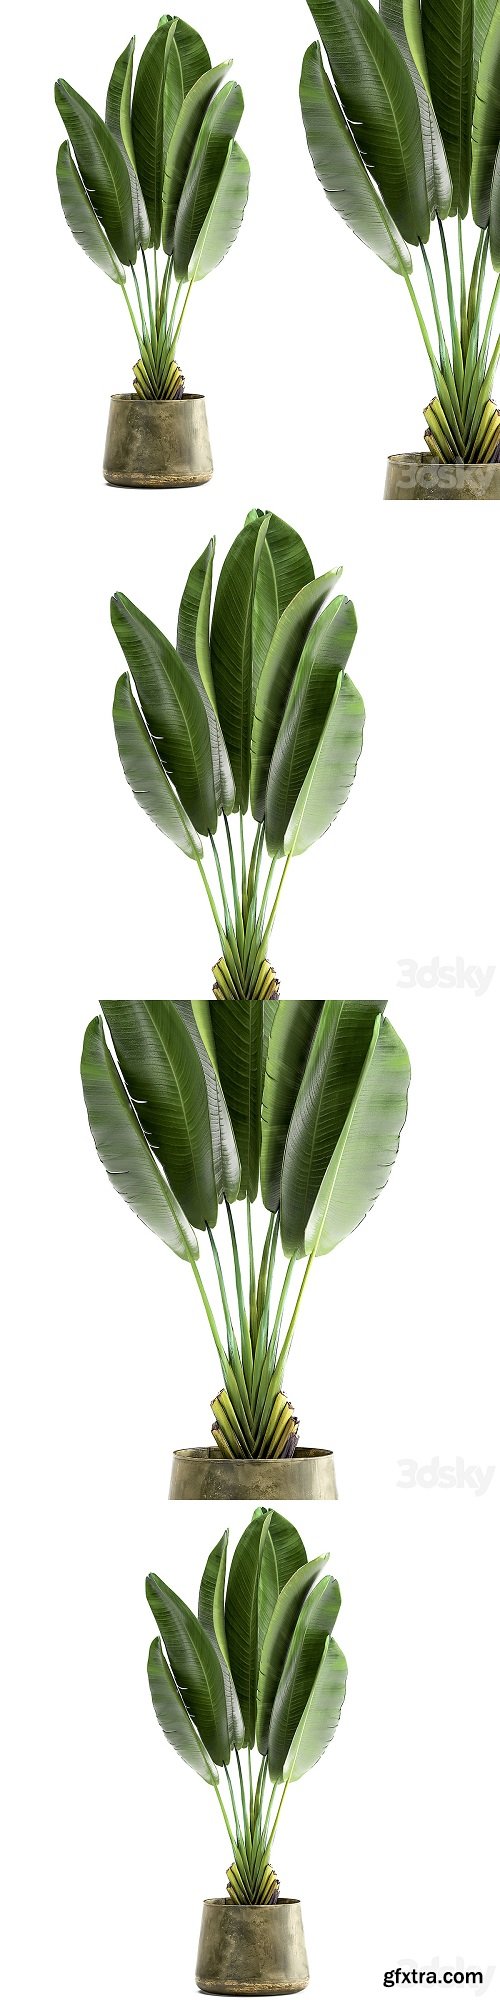 Ravenala 926. Strelitzia, Banana palm, metal flowerpot, industrial style, luxury